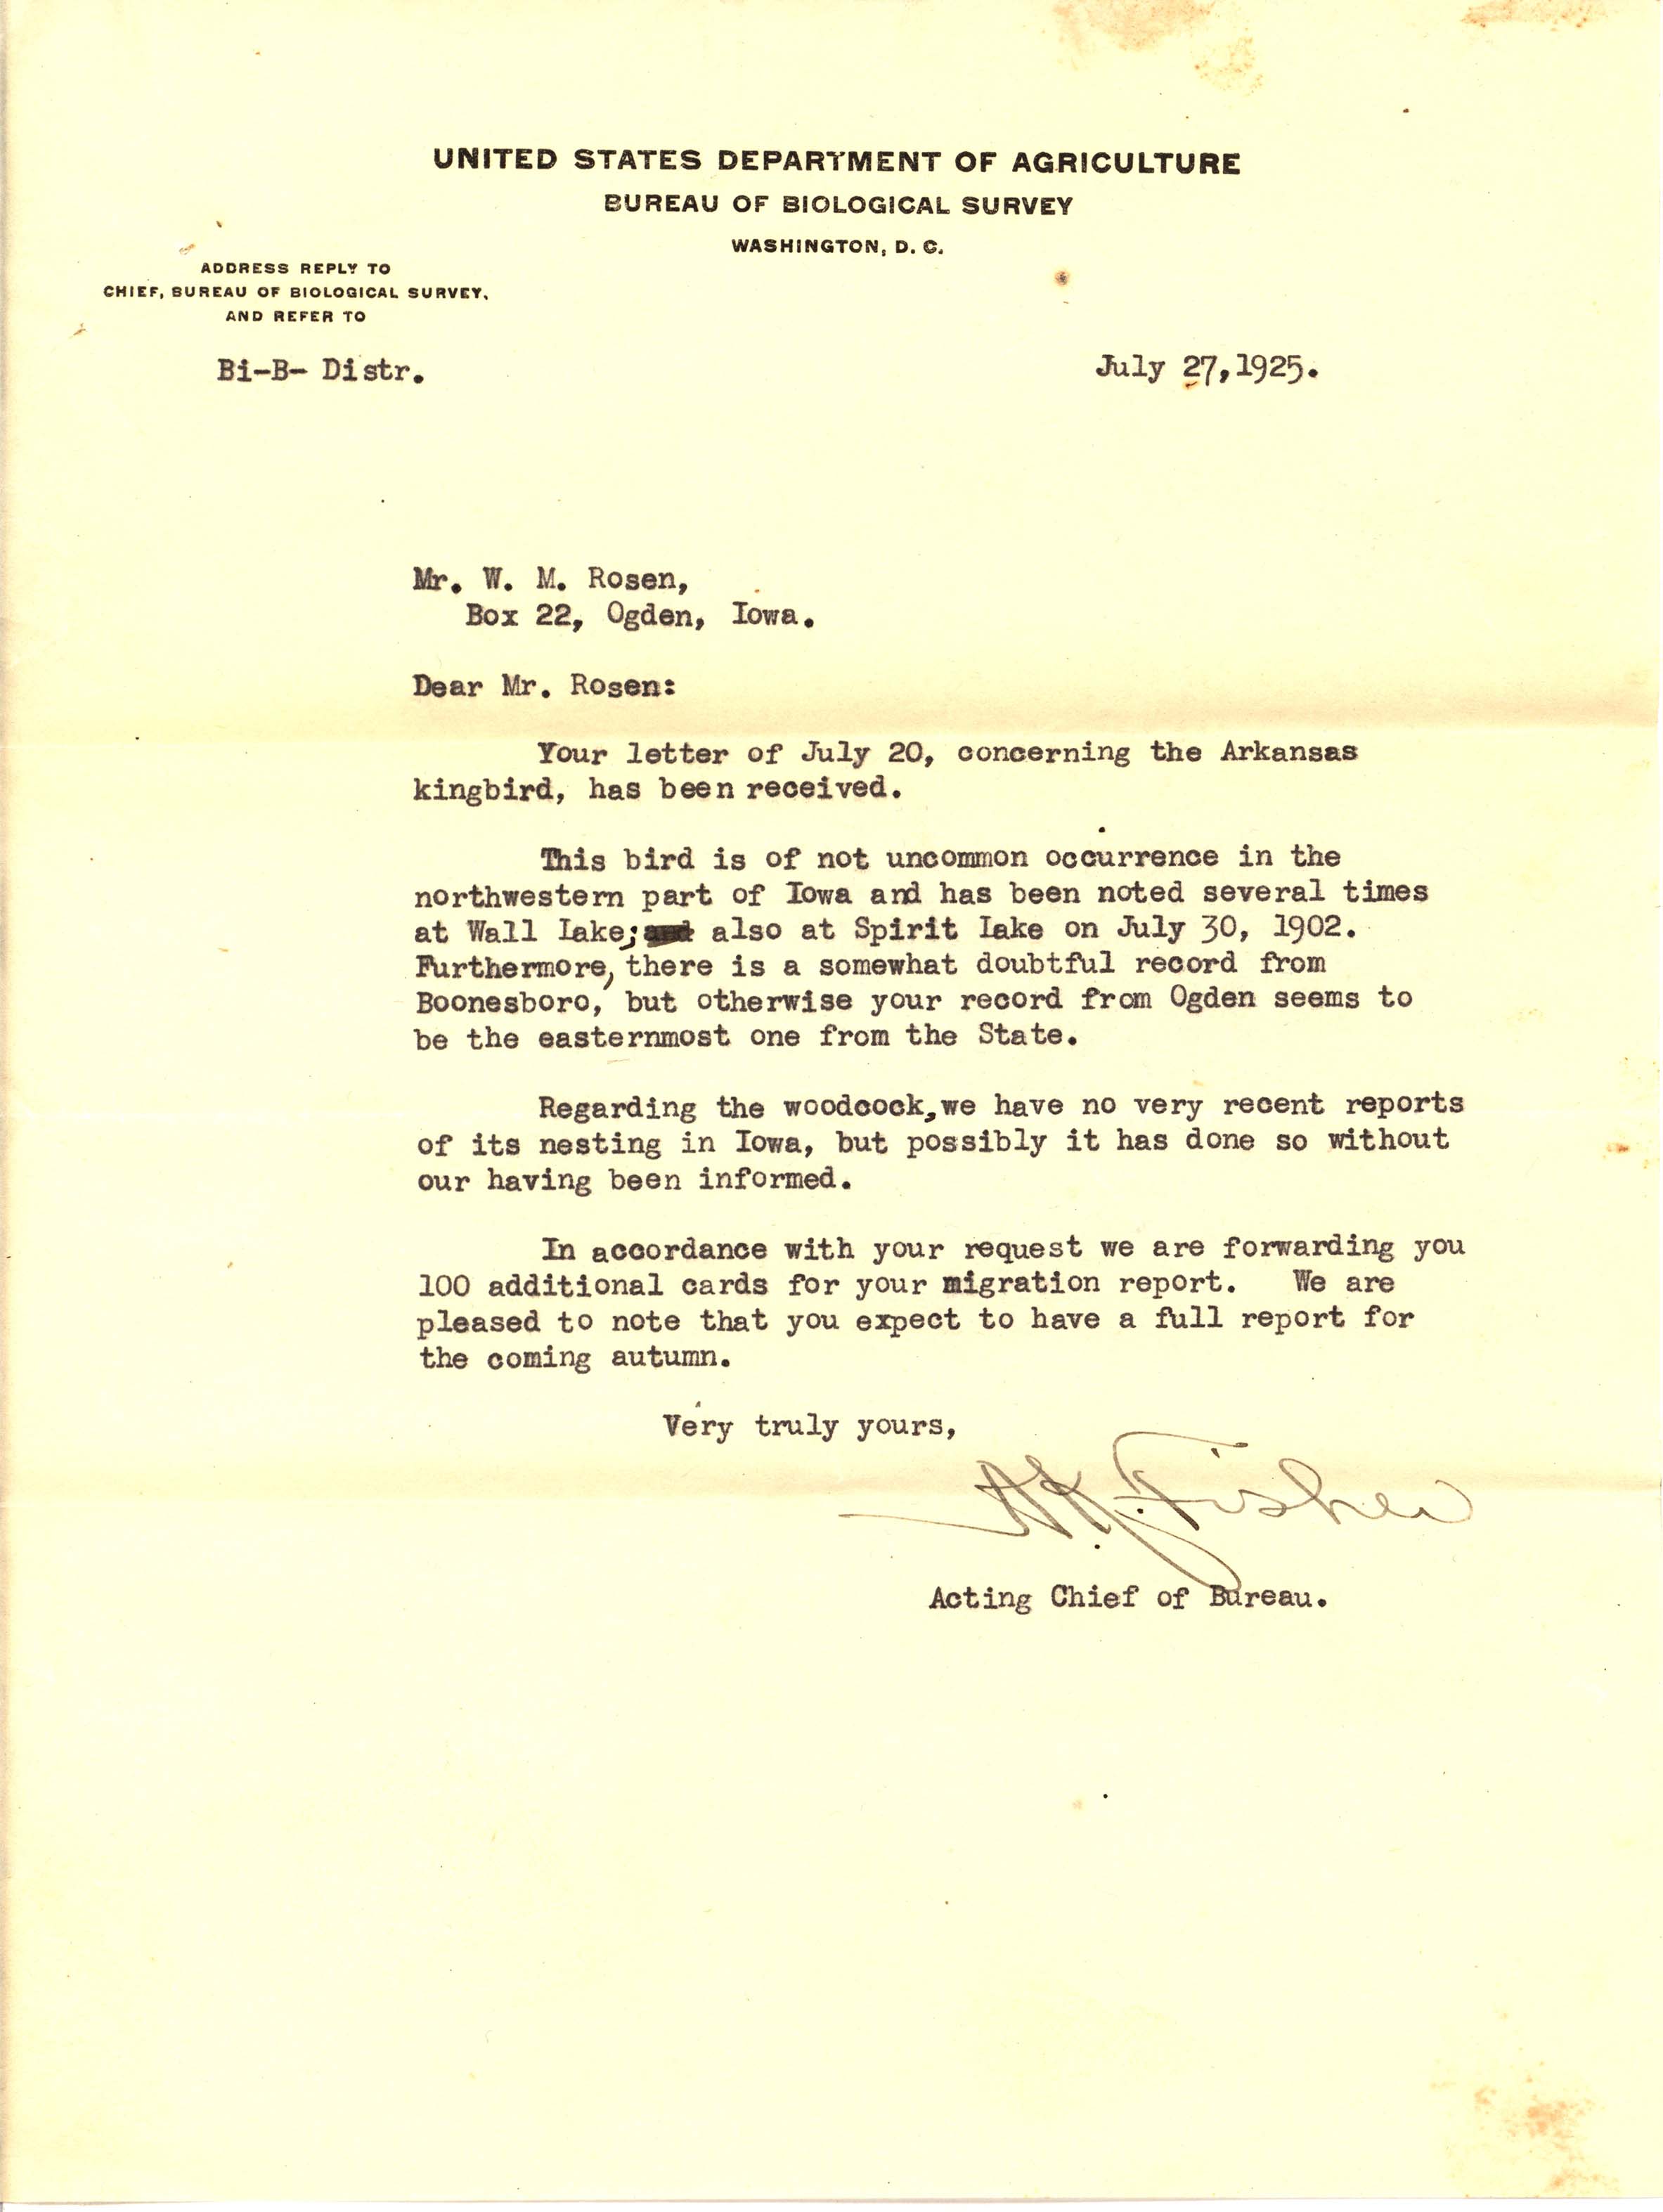 Albert K. Fisher letter to Walter Rosene regarding Arkansas Kingbird and American Woodcock records, July 27, 1925